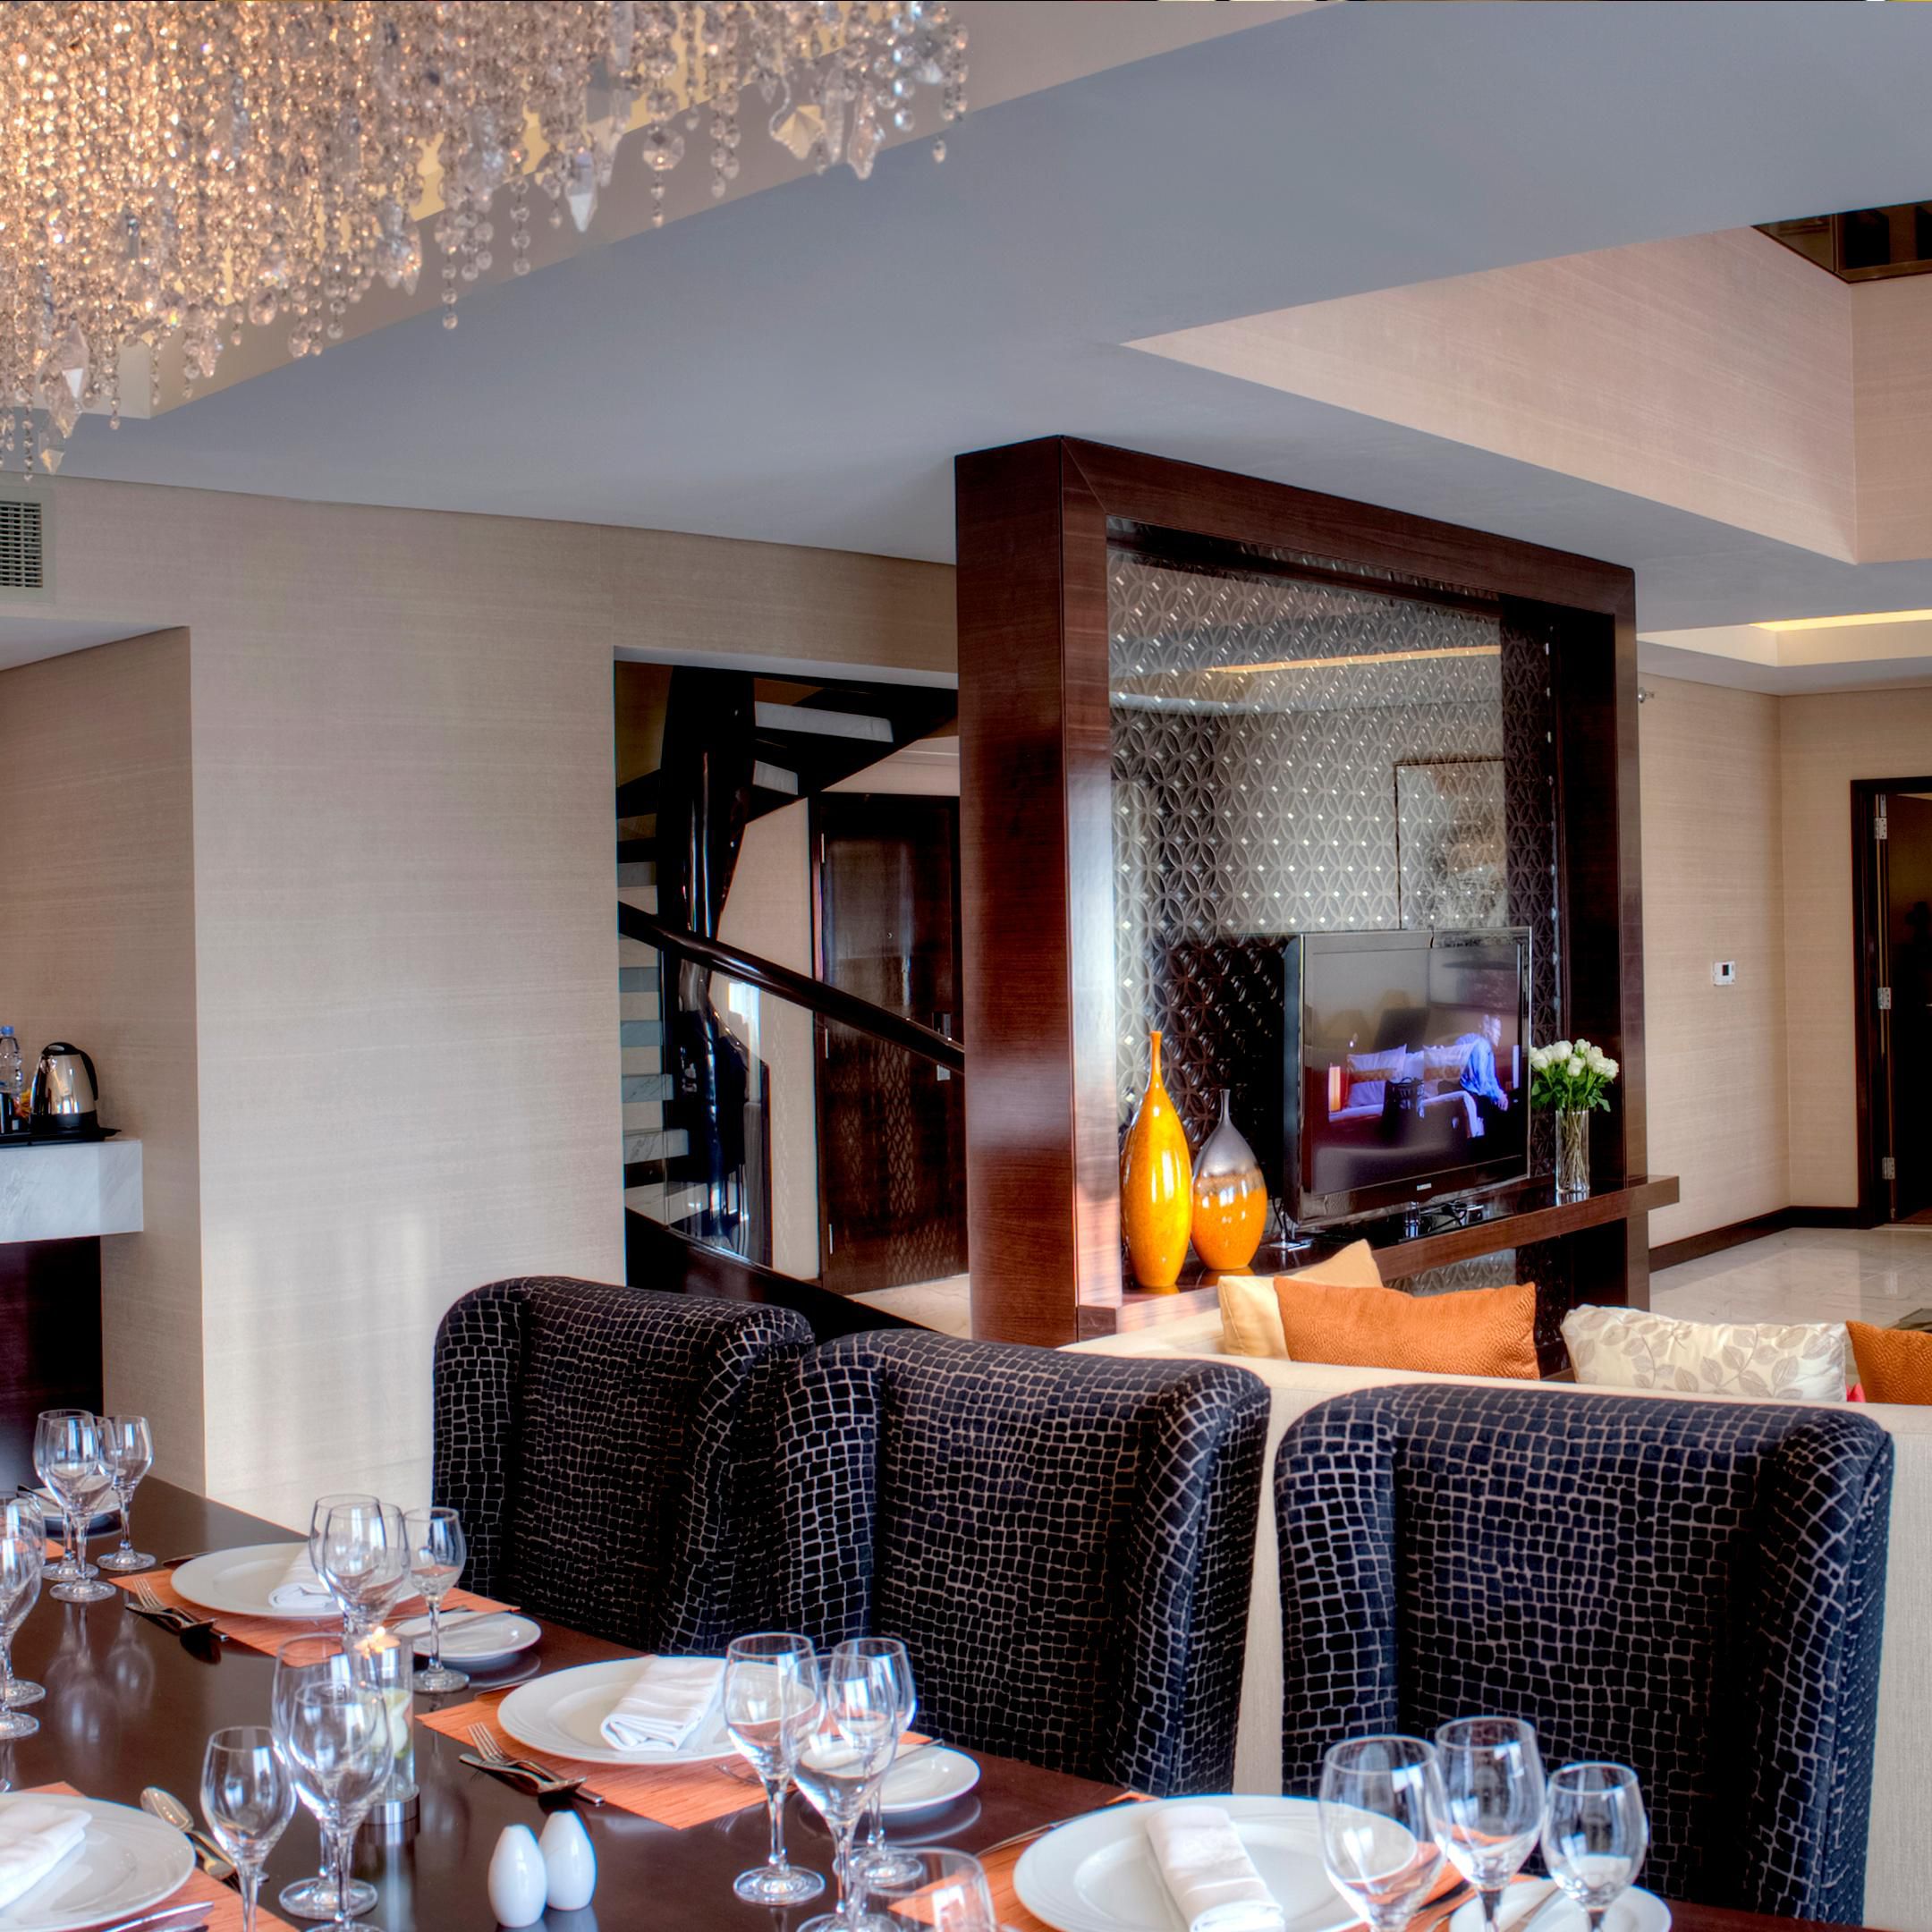 rowne Plaza Dubai-Deira - 5 star hotel - ROYAL SUITE DINING TABLE